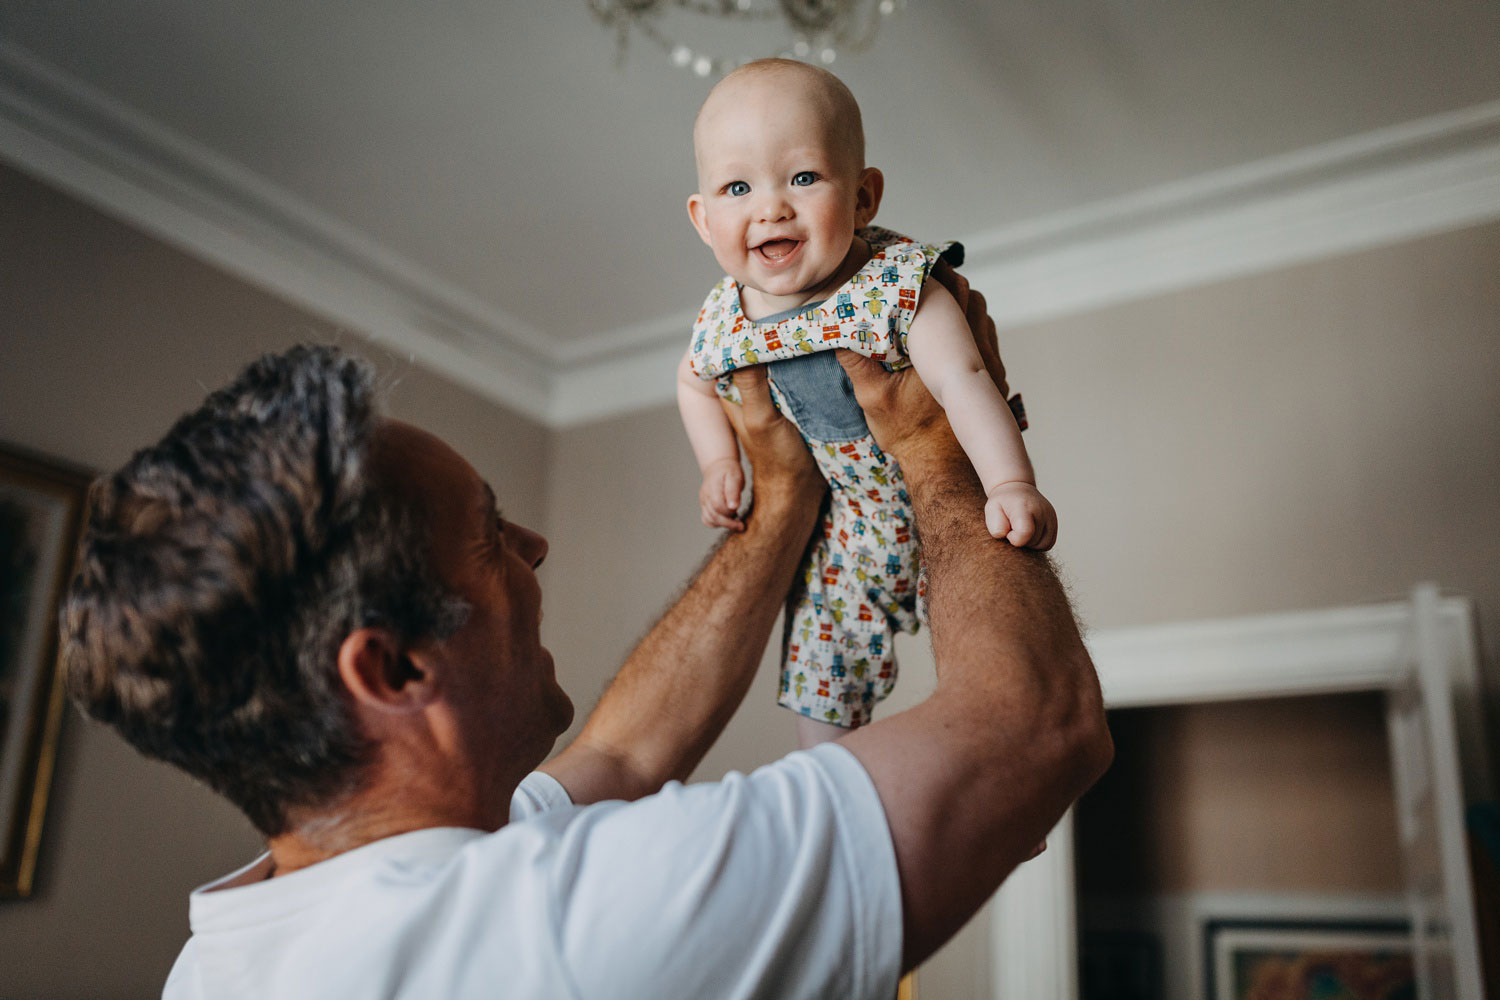 Copenhagen family photographer captures joyful moments at home